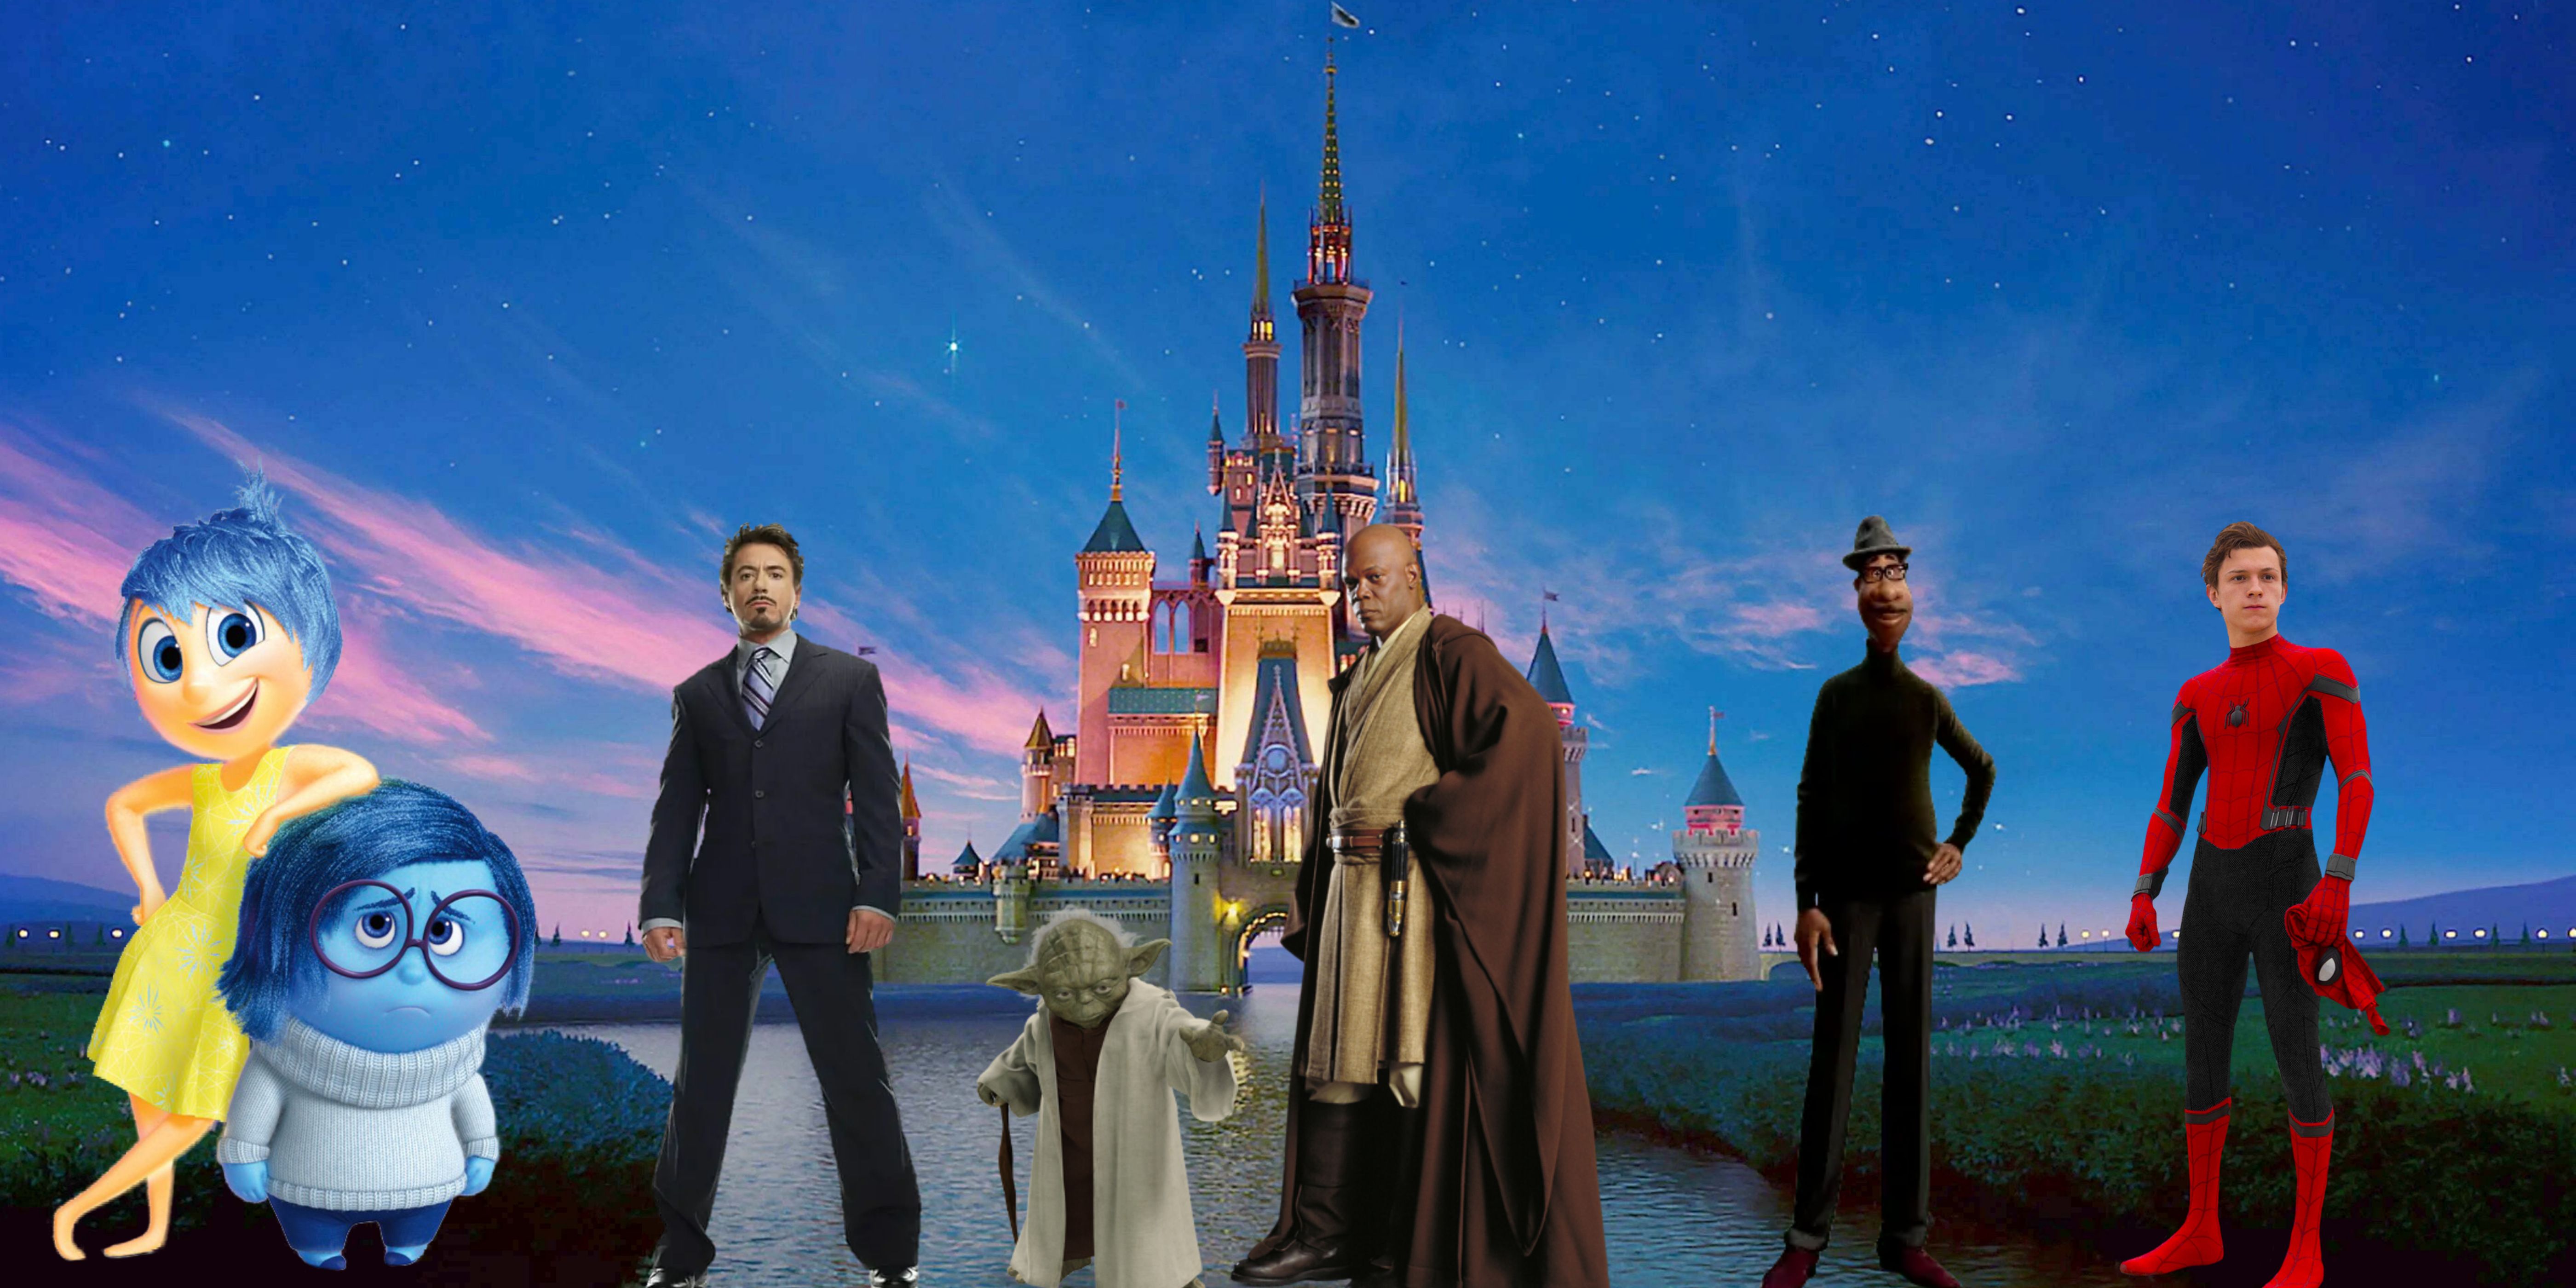 Gathering of Disney Heroes in front of Disney Castle